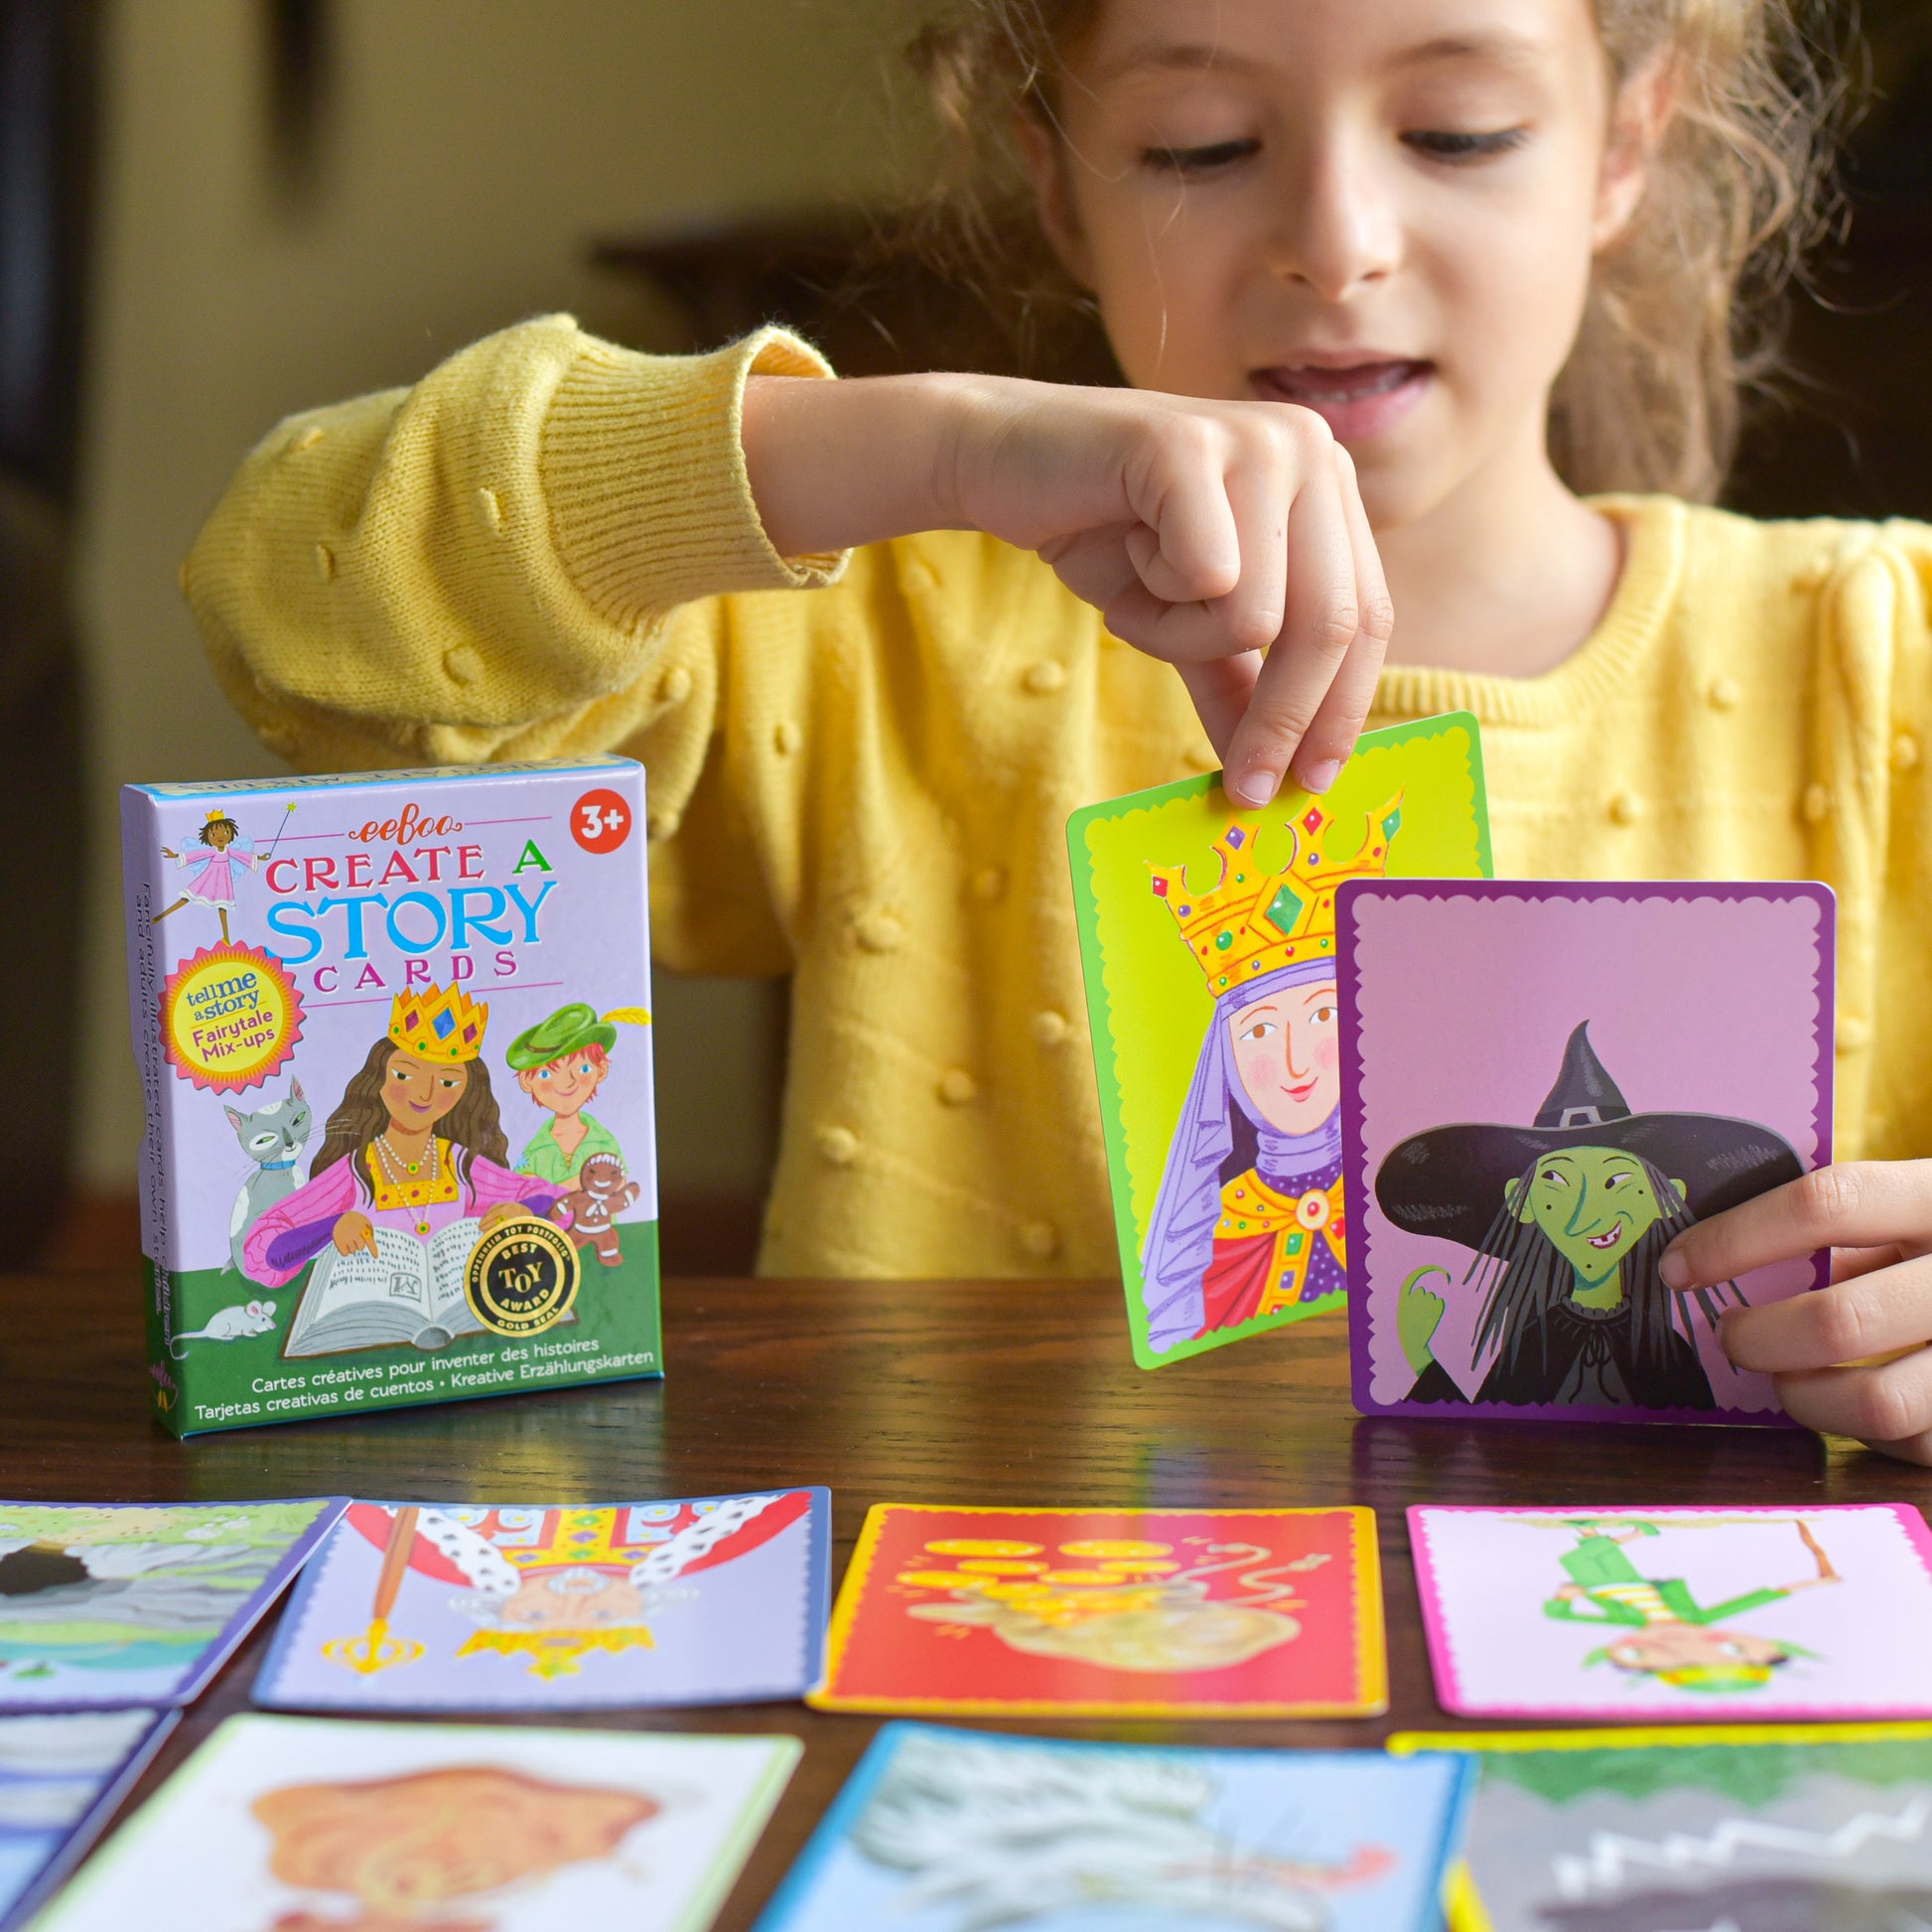 Five Crowns - A Terrific Card Game for Tweens and Teens - Grandma